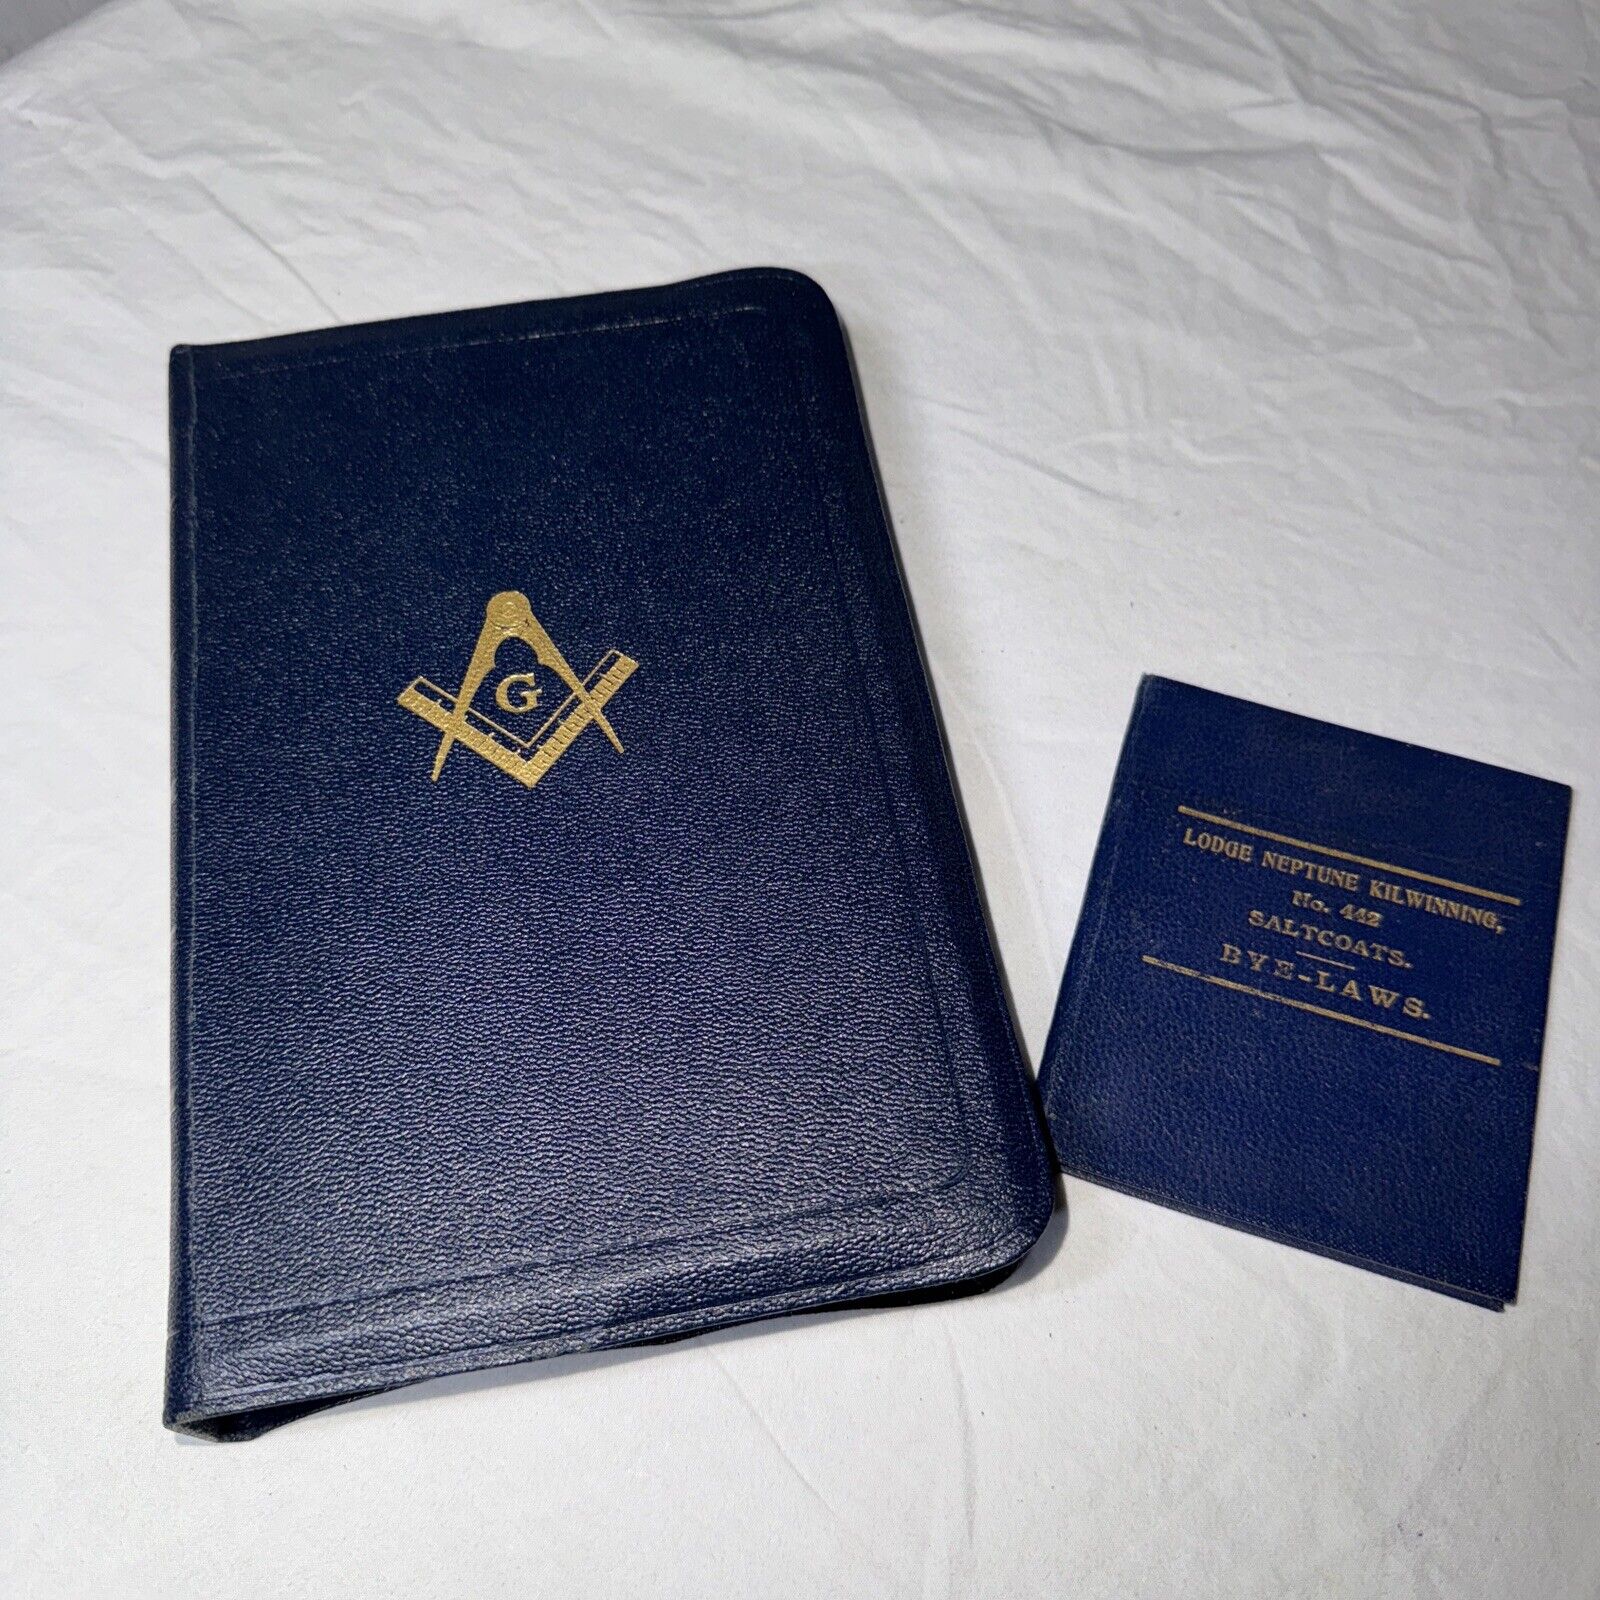 Masonic Bible And Bye Laws Lodge Neptune Kilwinning 442 Saltcoats Lot